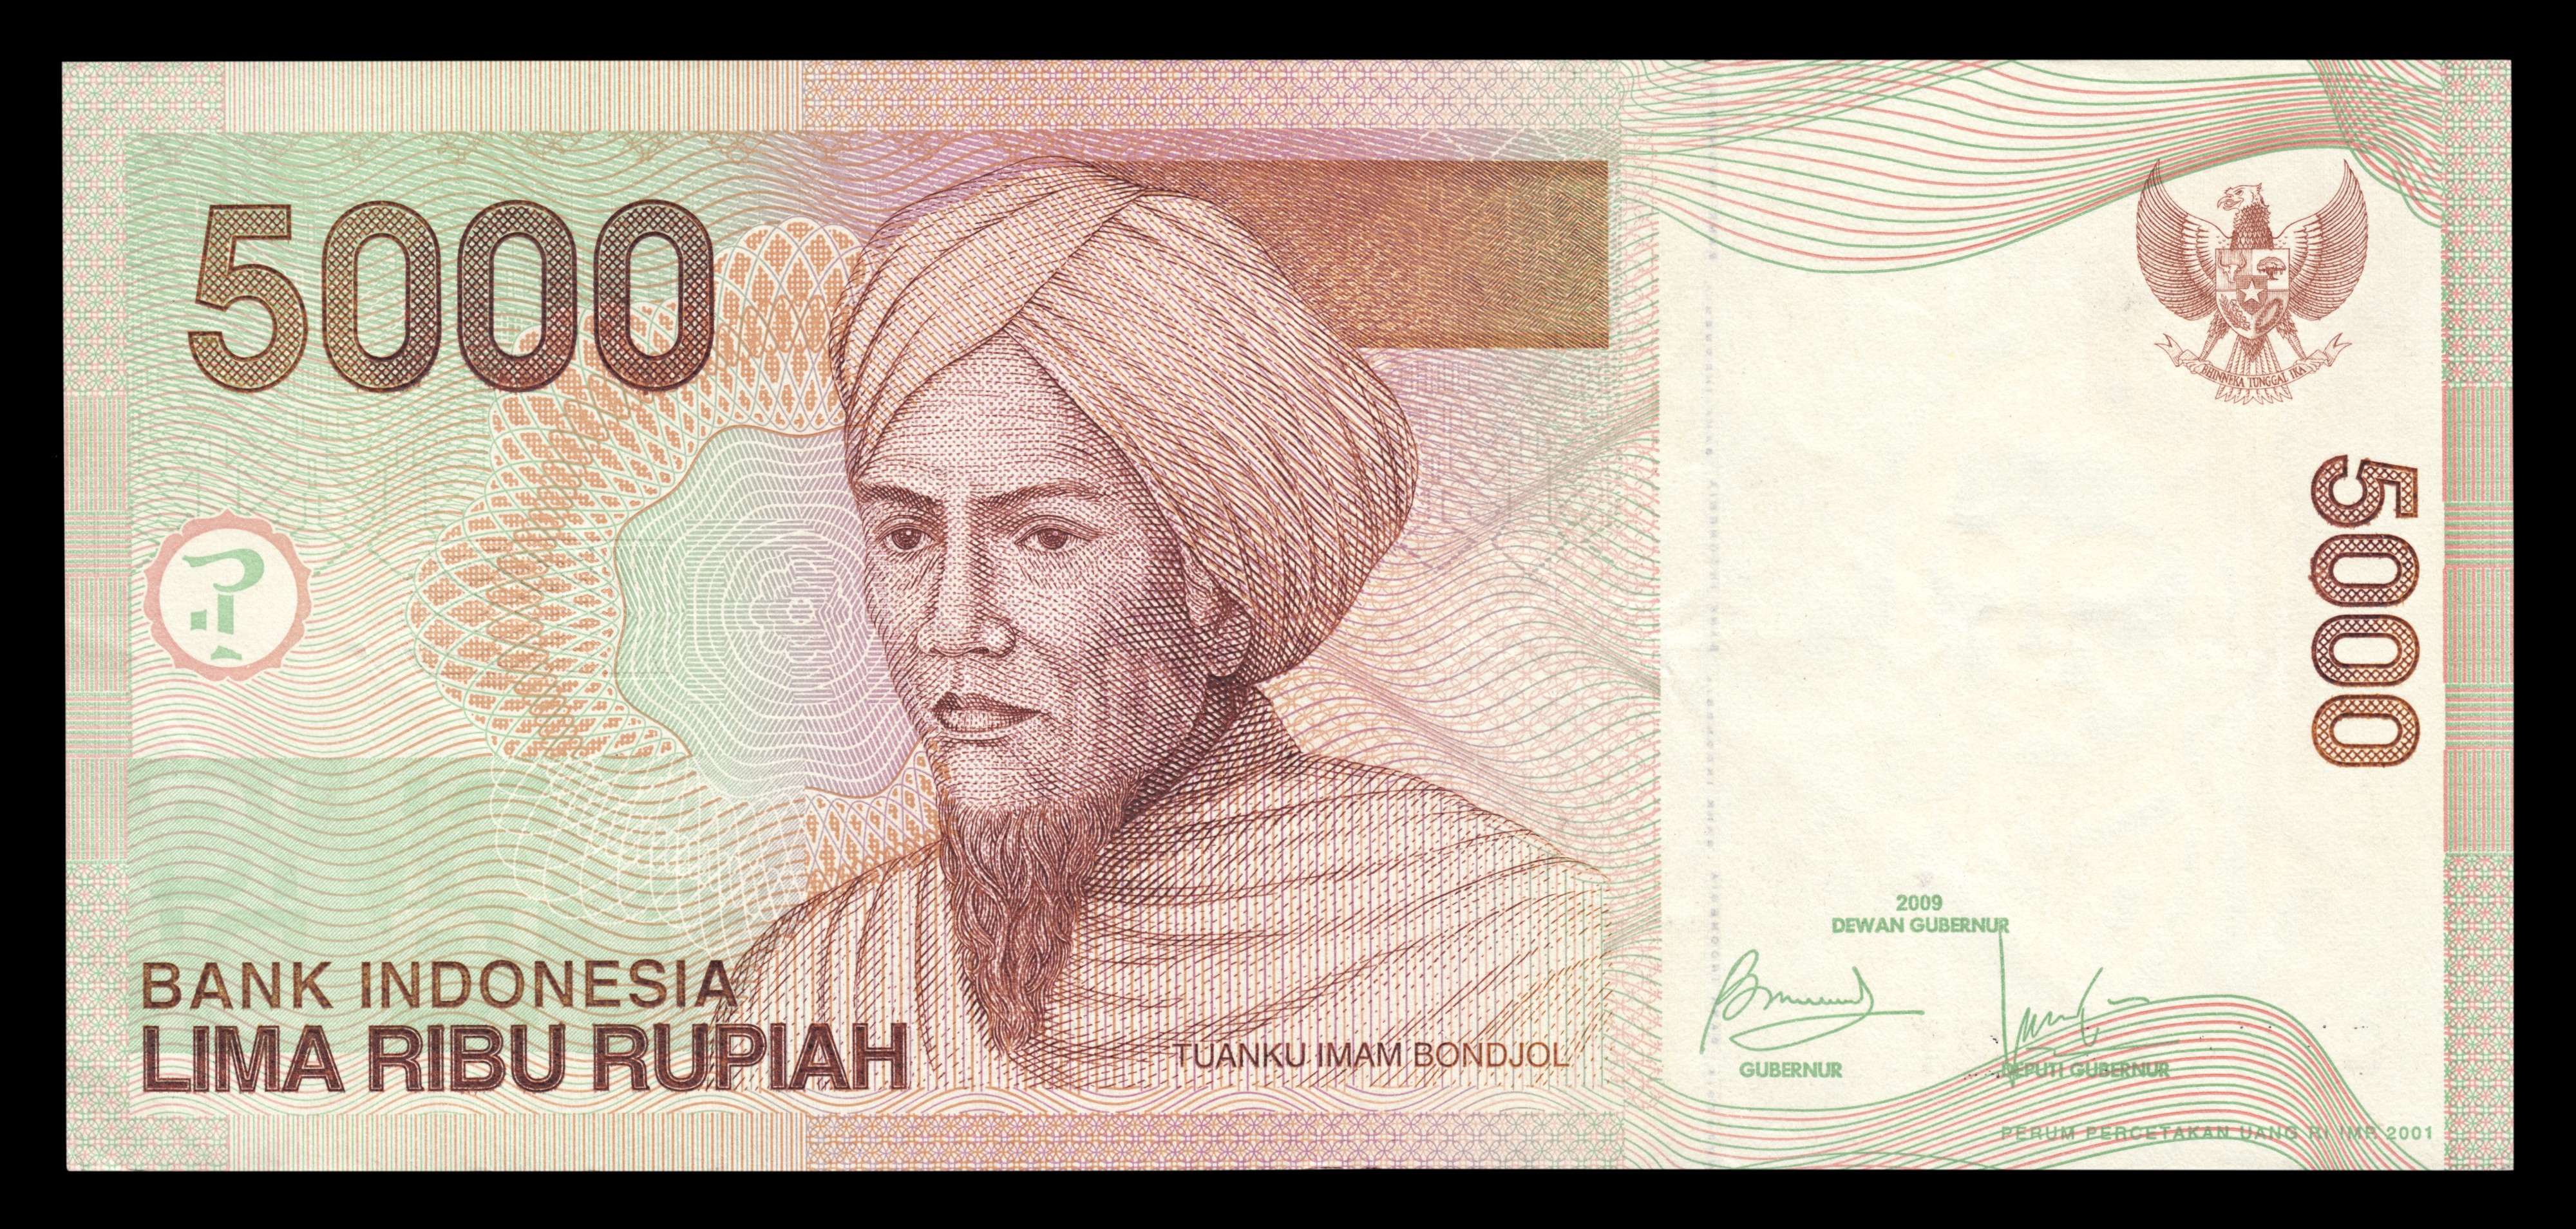 5000 rupiah bill, 2001 series (2009 date), processed, obverse